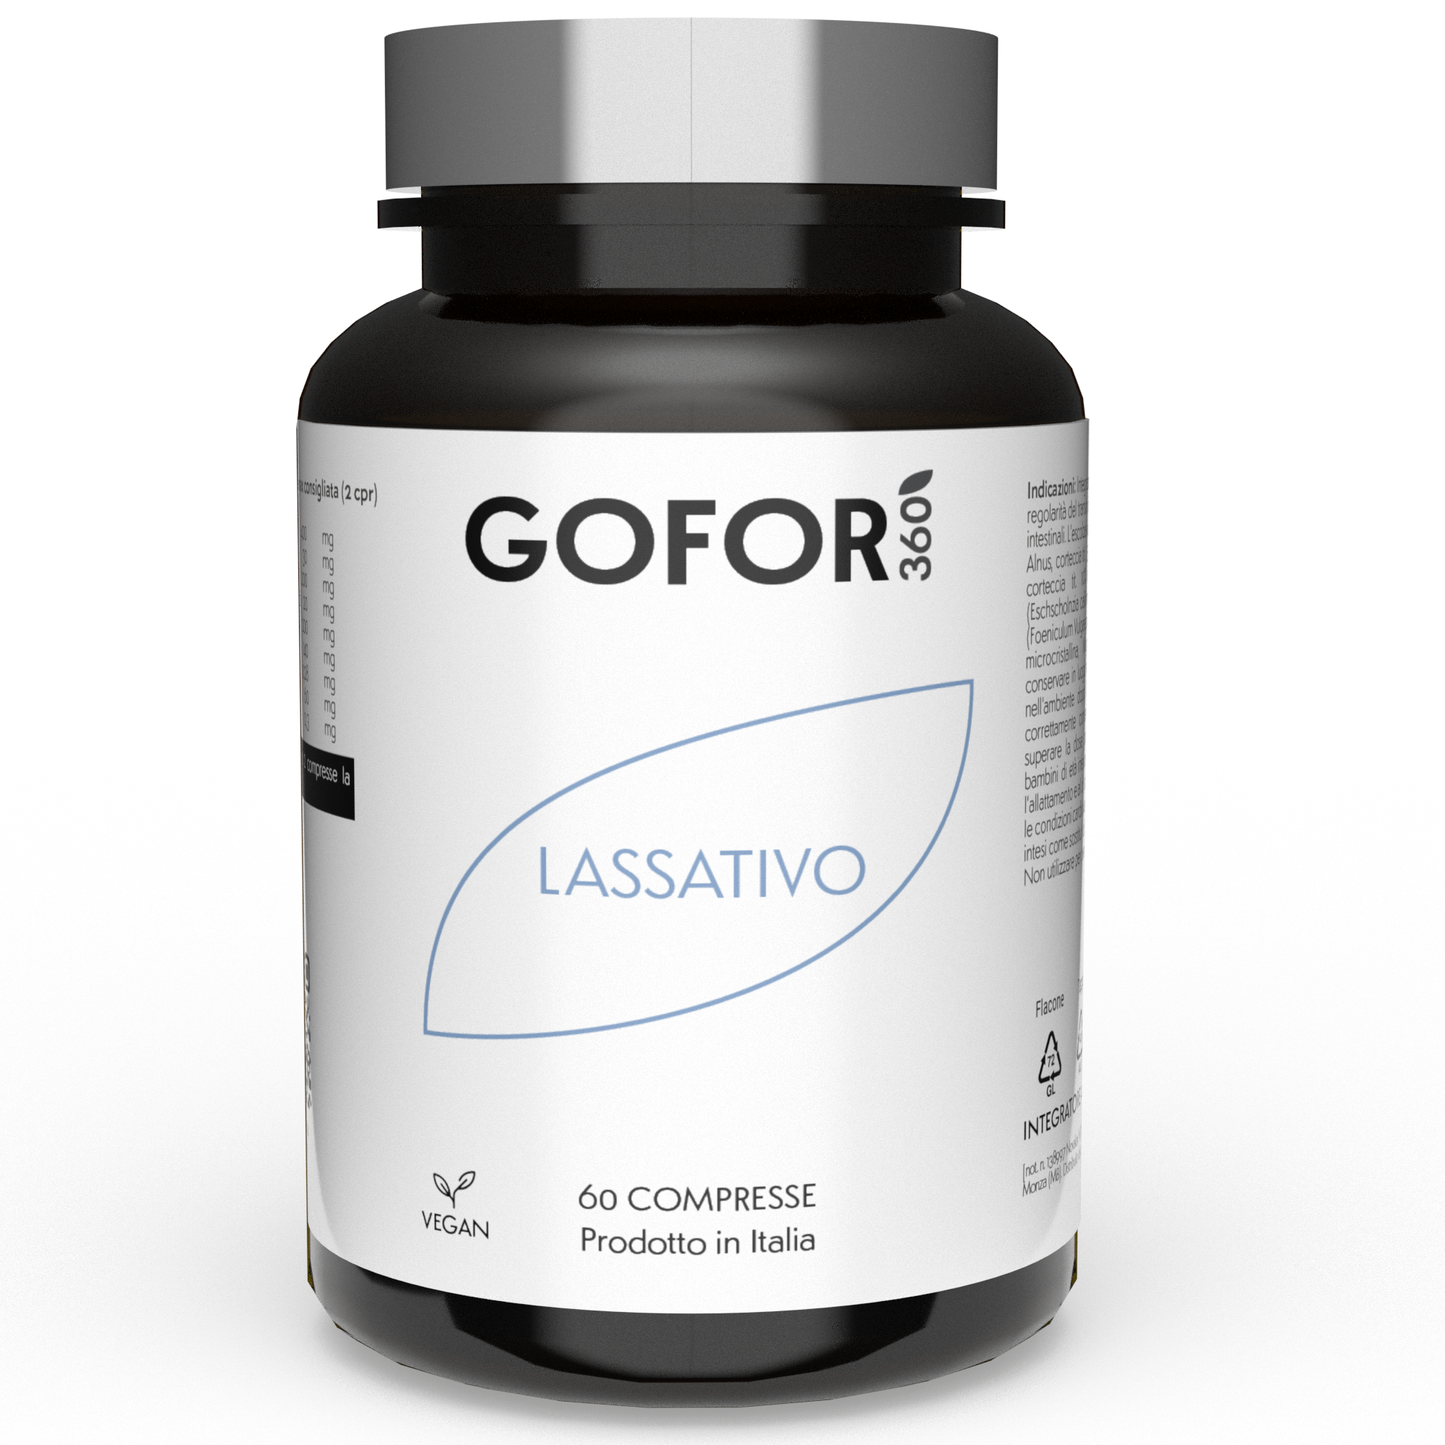 GOFOR360 - Lassativo